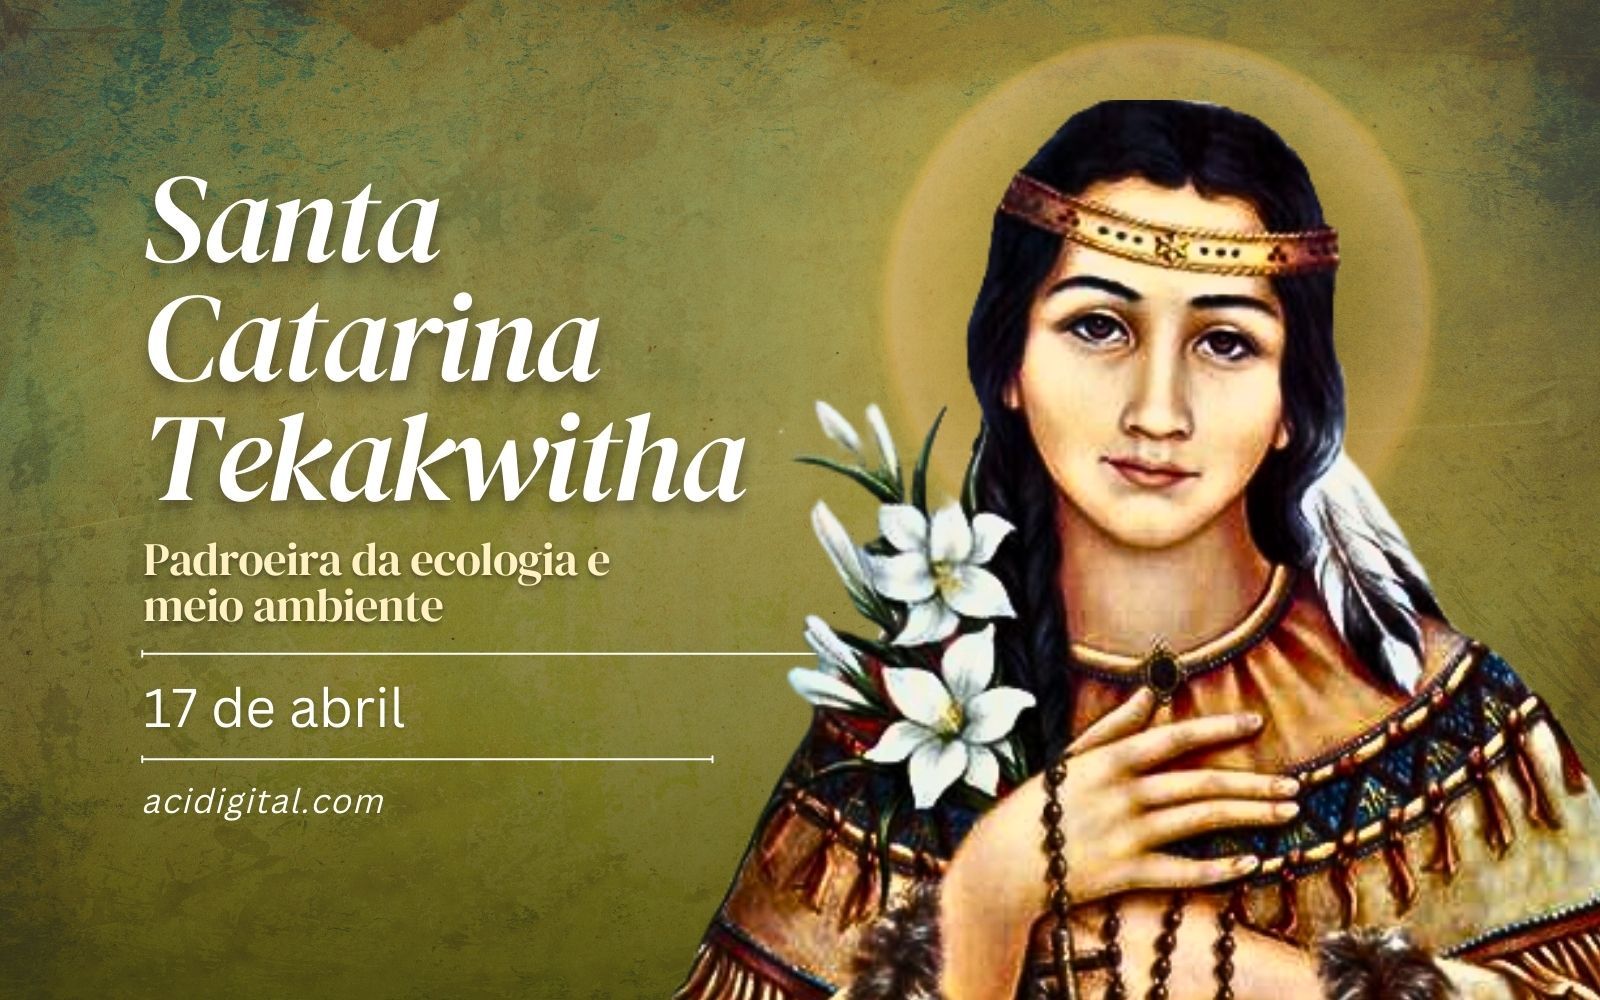 Santa Catarina Tekakwitha, a primeira santa pele vermelha